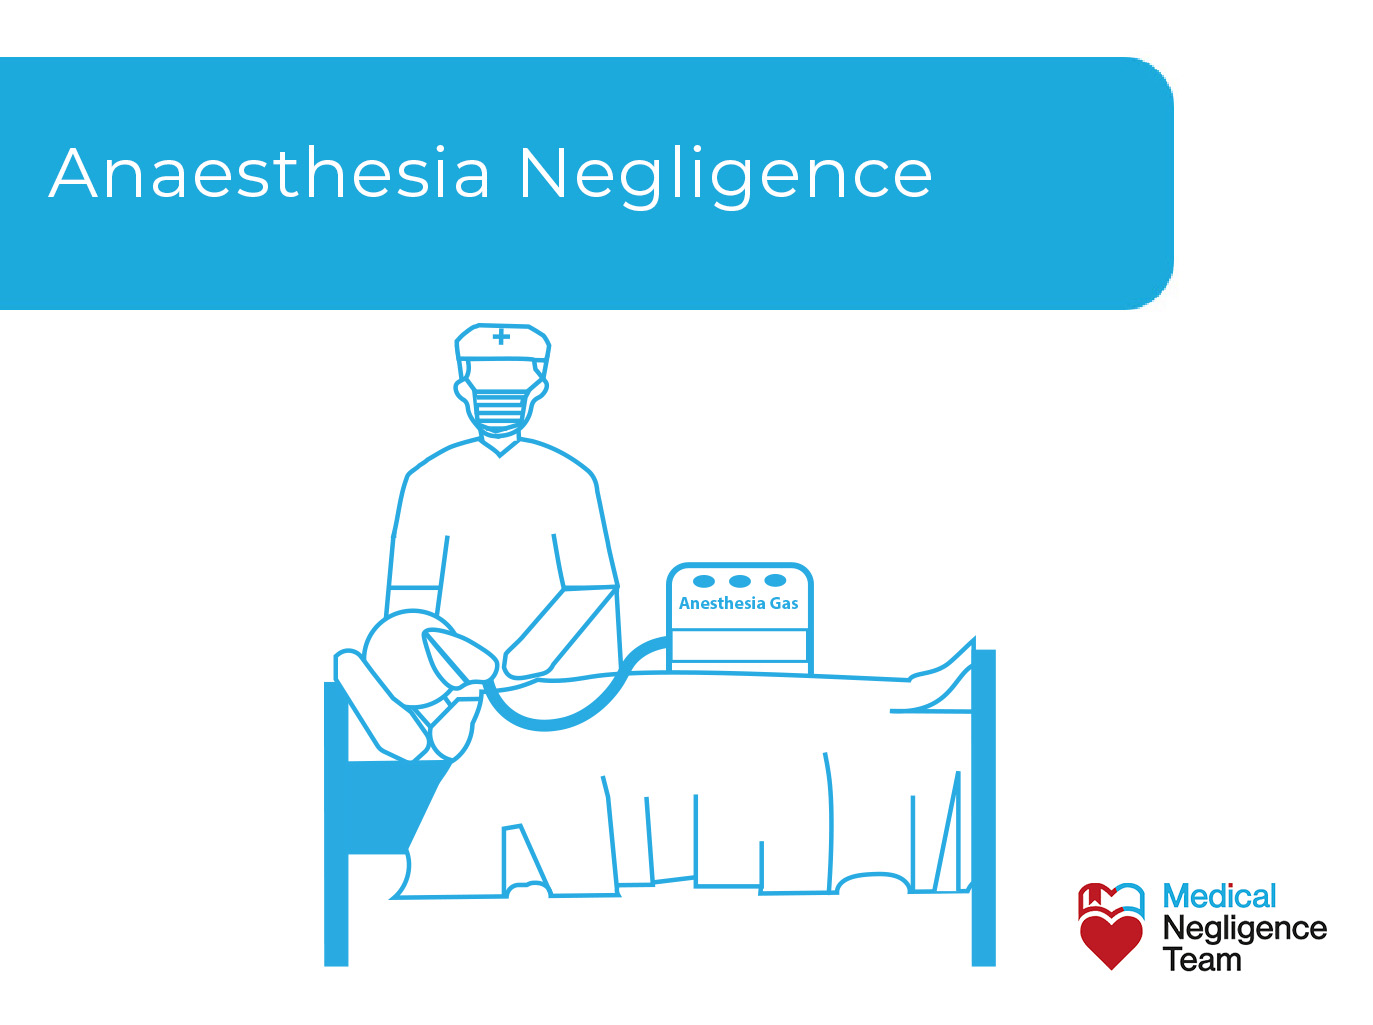 Anaesthesia negligence claim